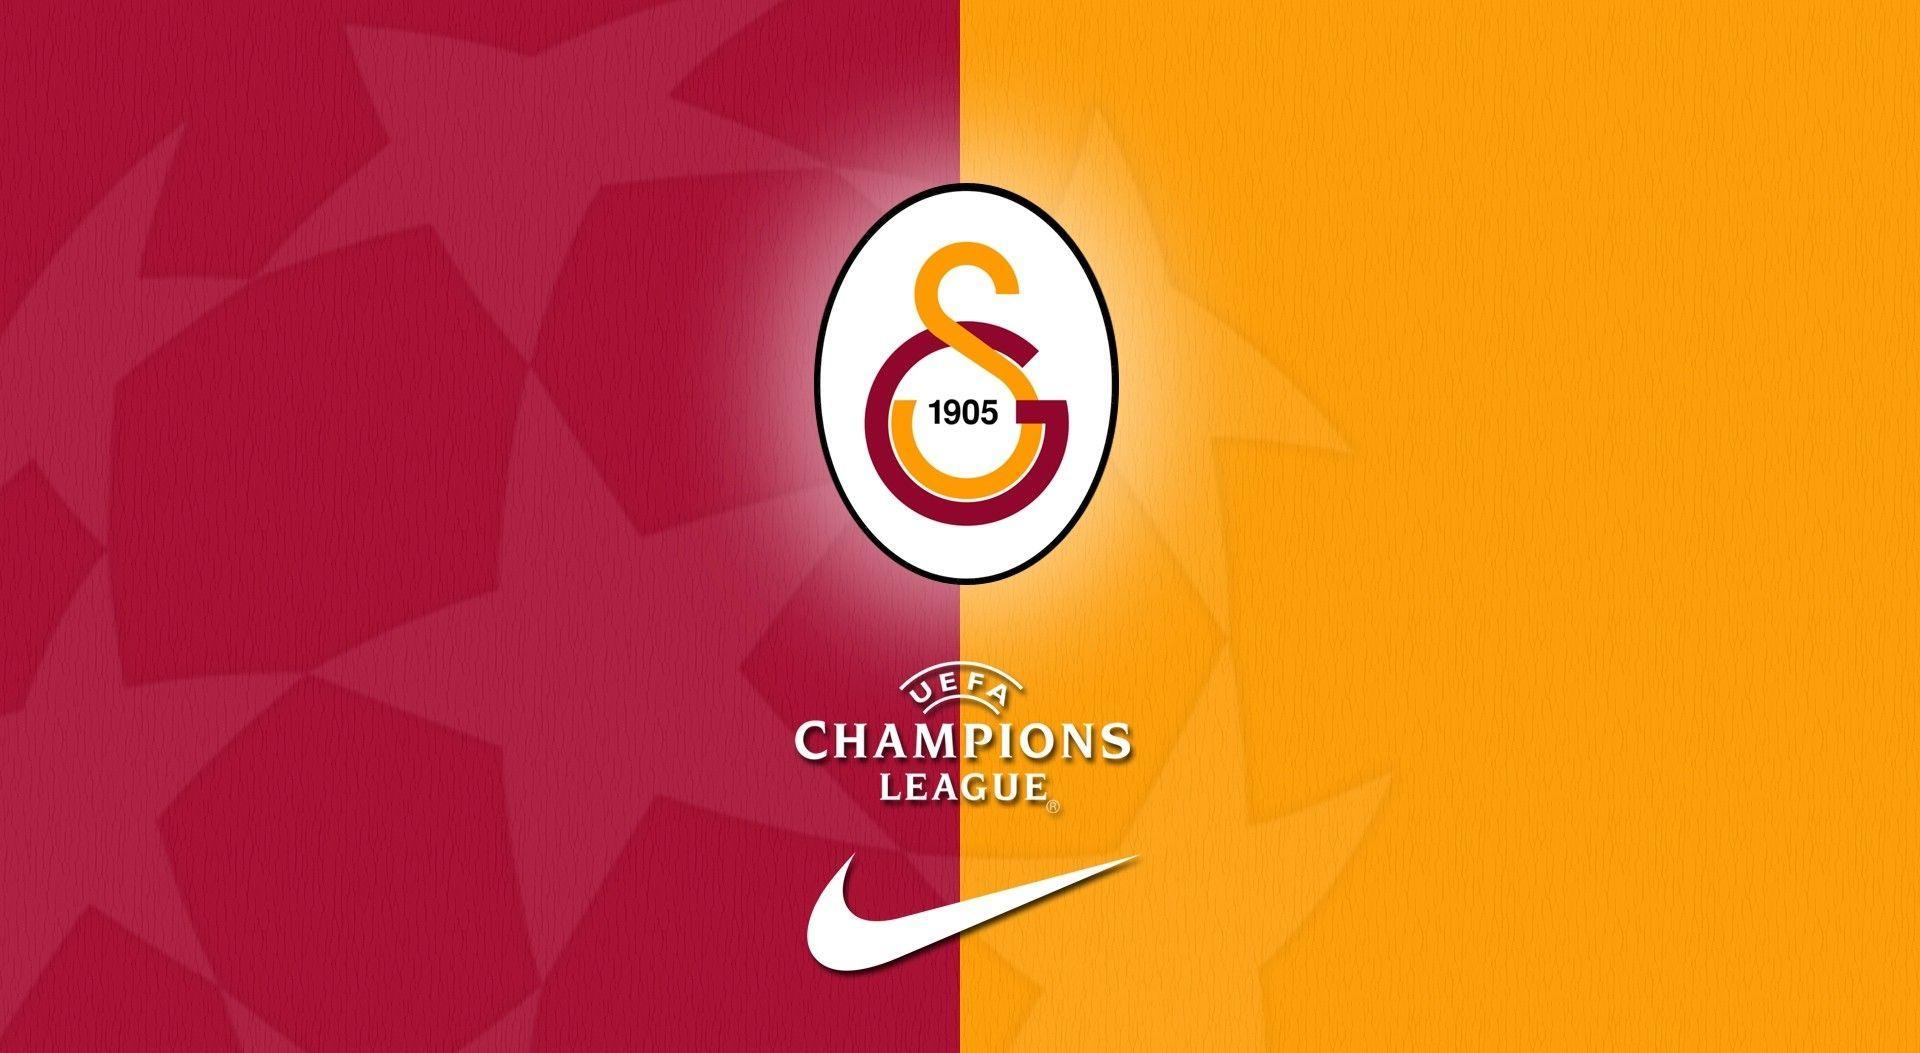 Galatasaray HQ Wallpaper. Full HD Picture